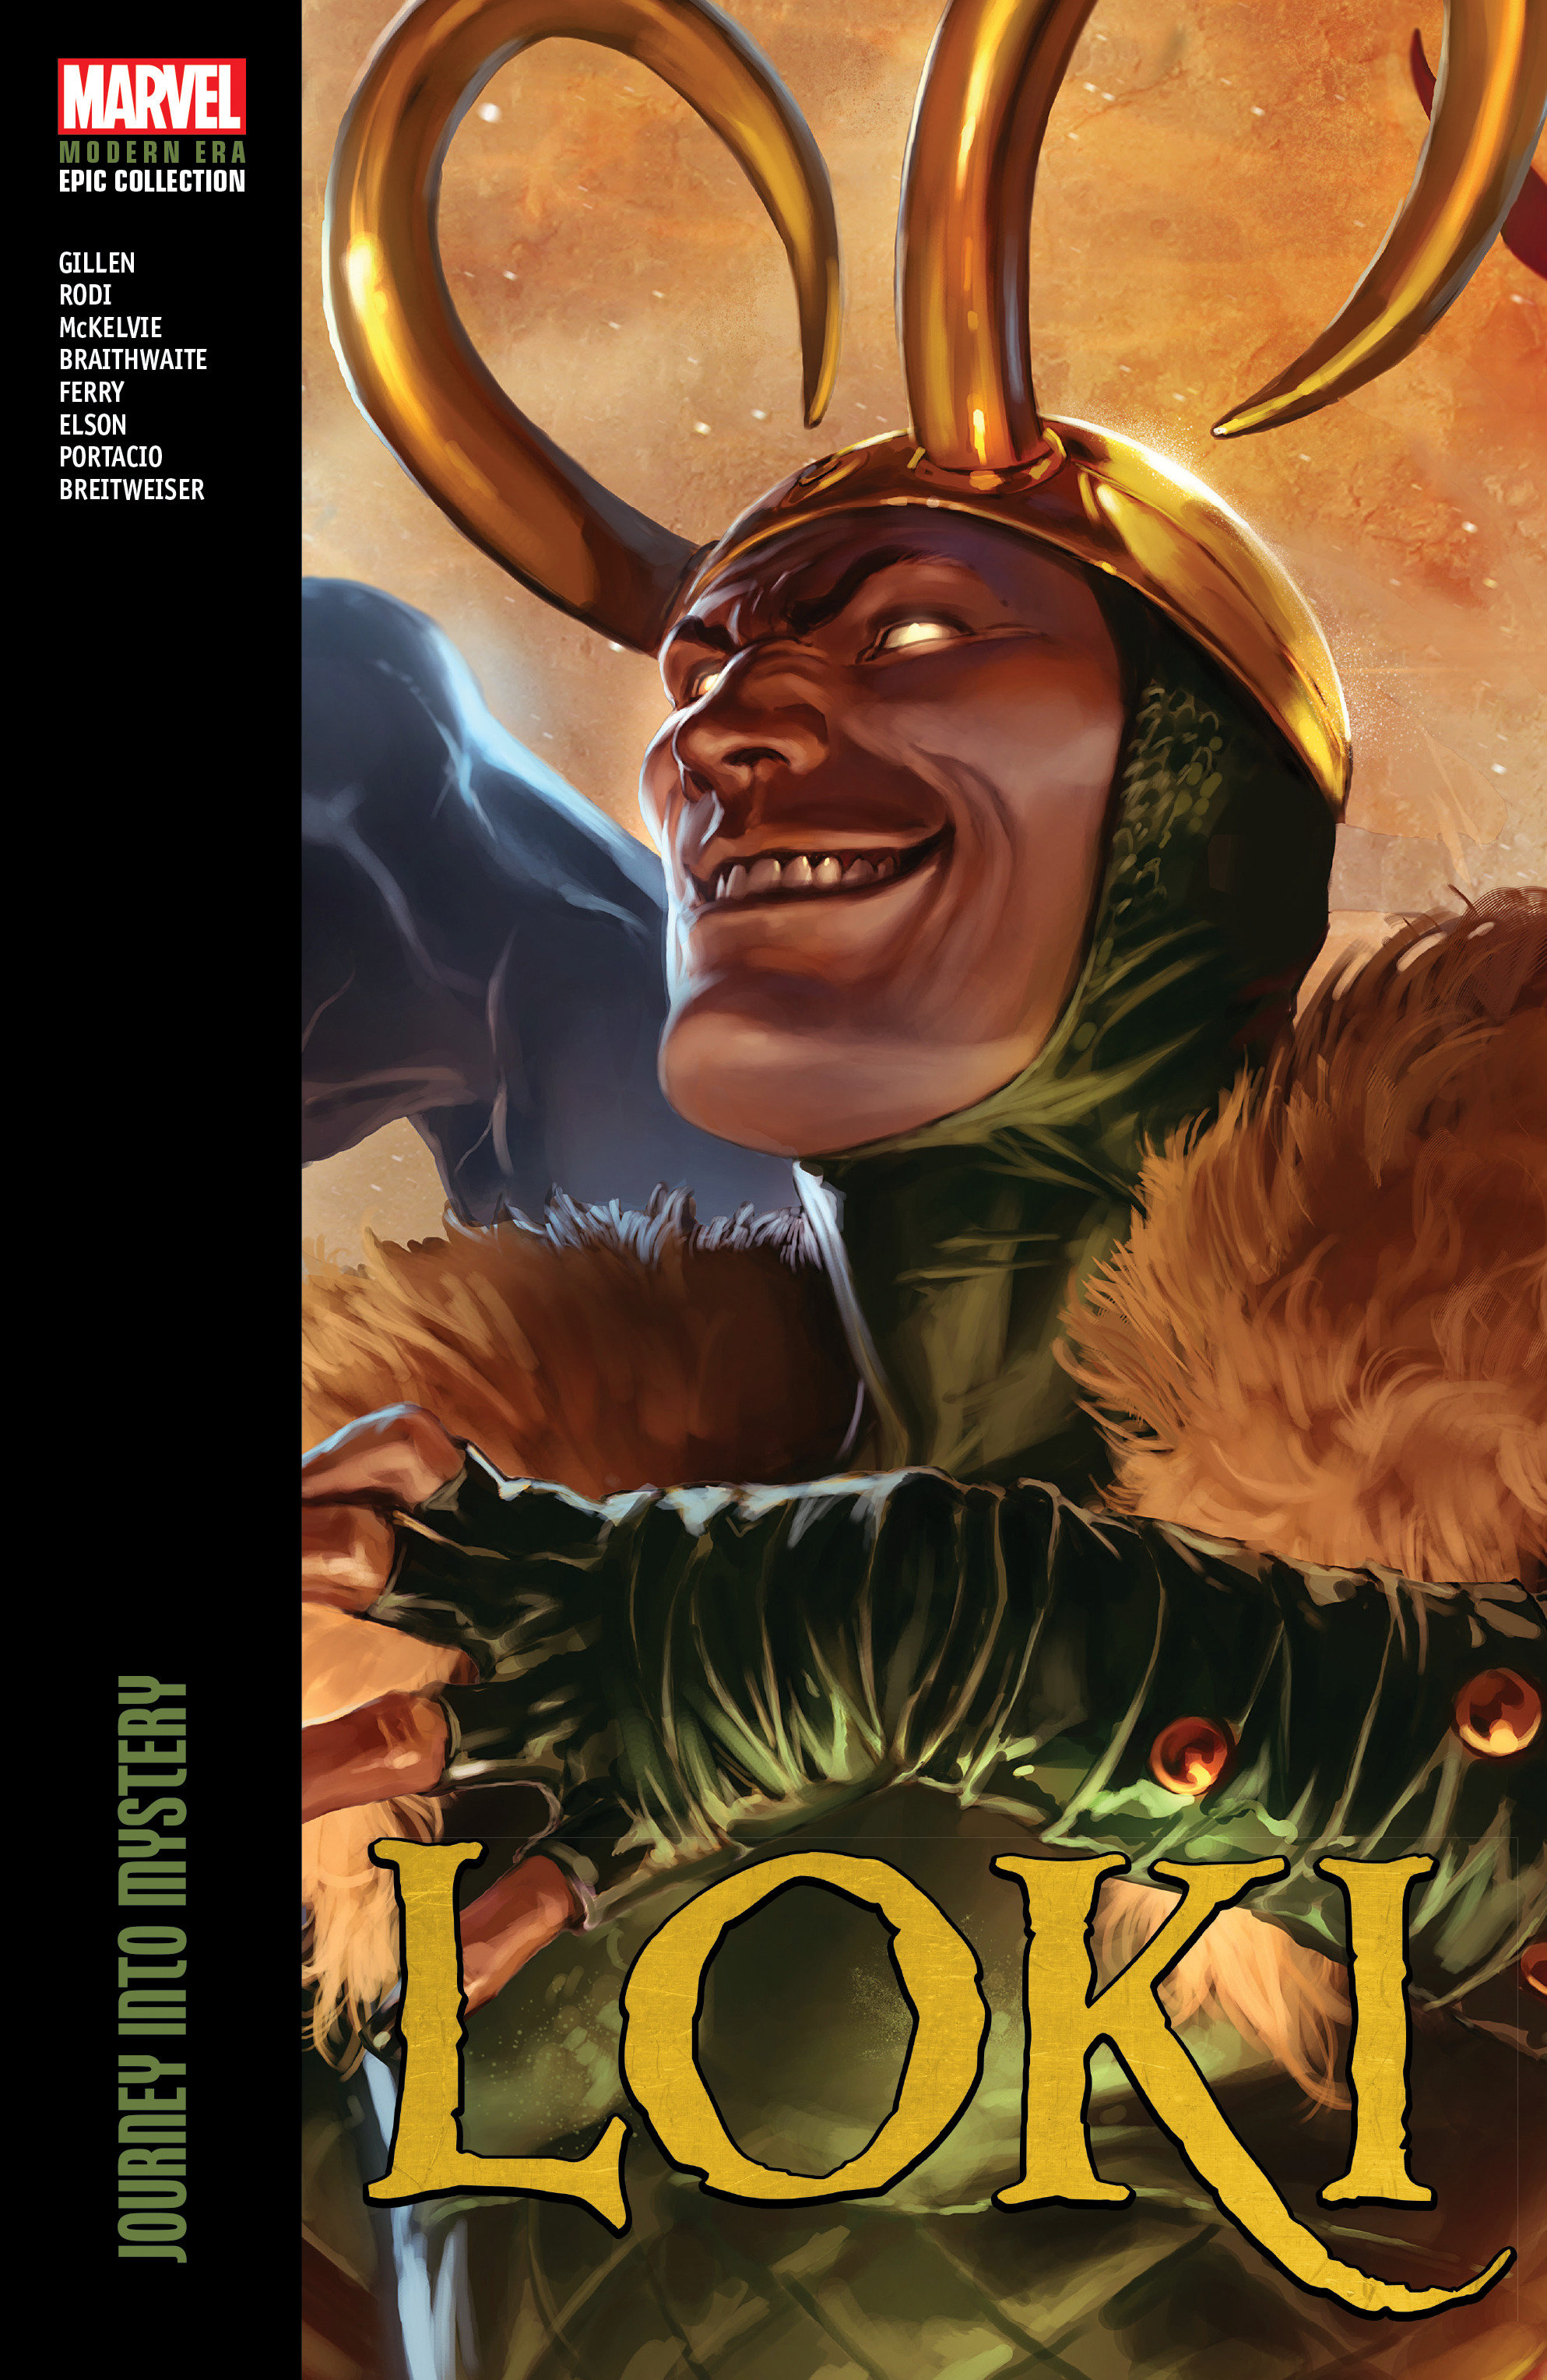 Loki Modern Era Epic Collection Graphic Novel Volume 1 Journey into Mystery